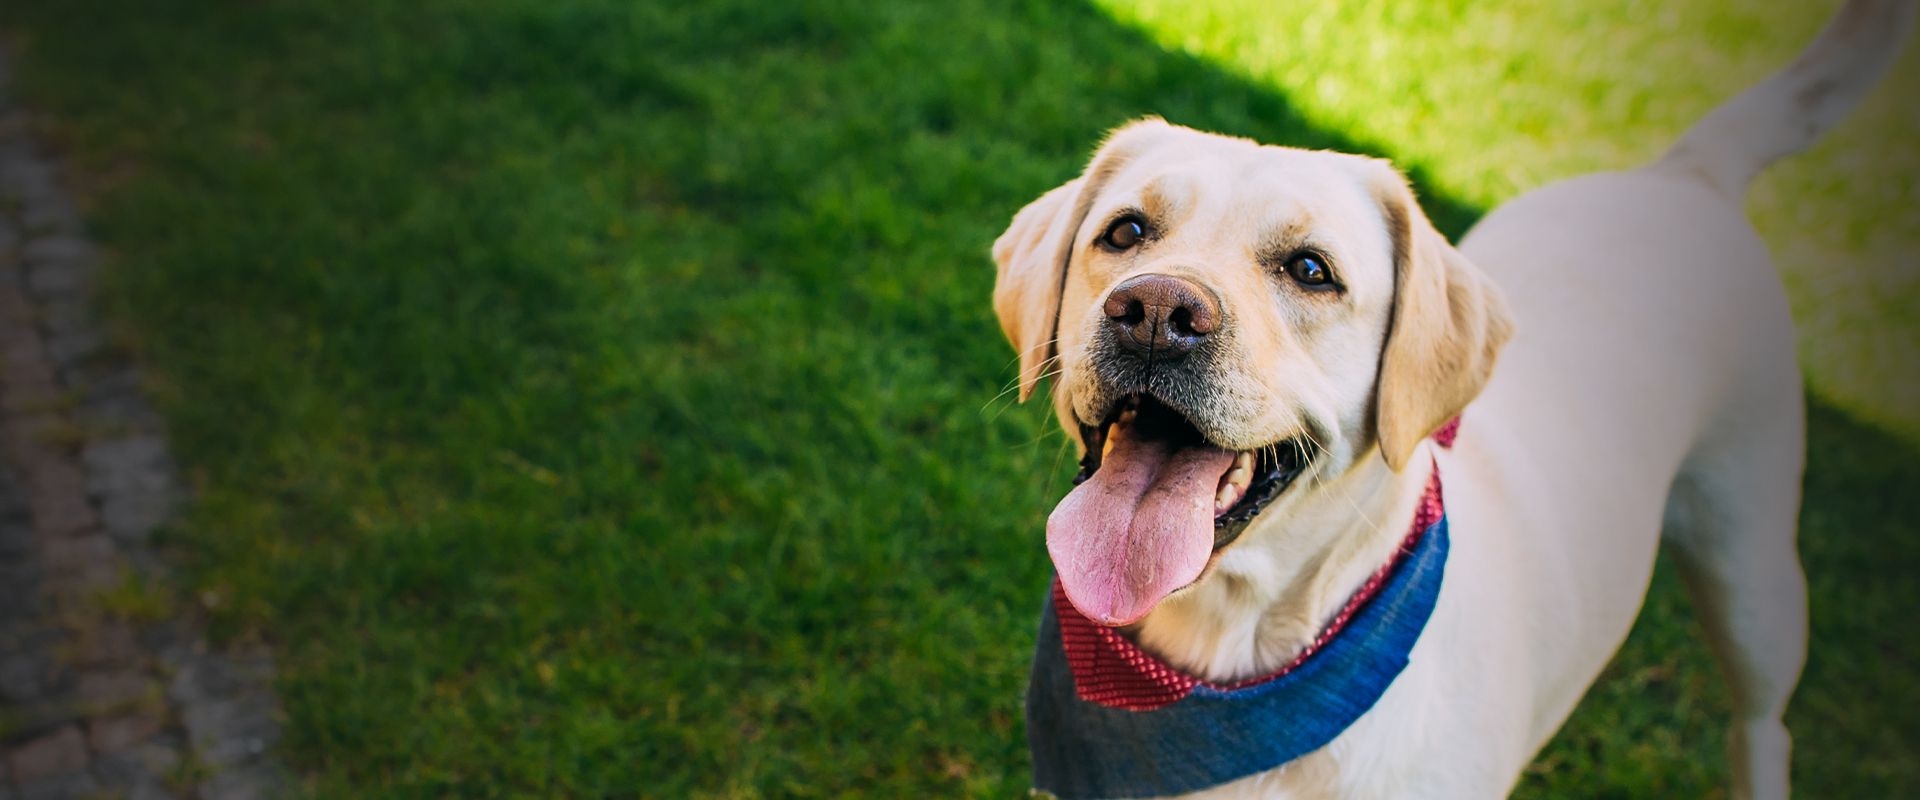 smiling labrador dog standing on green grass